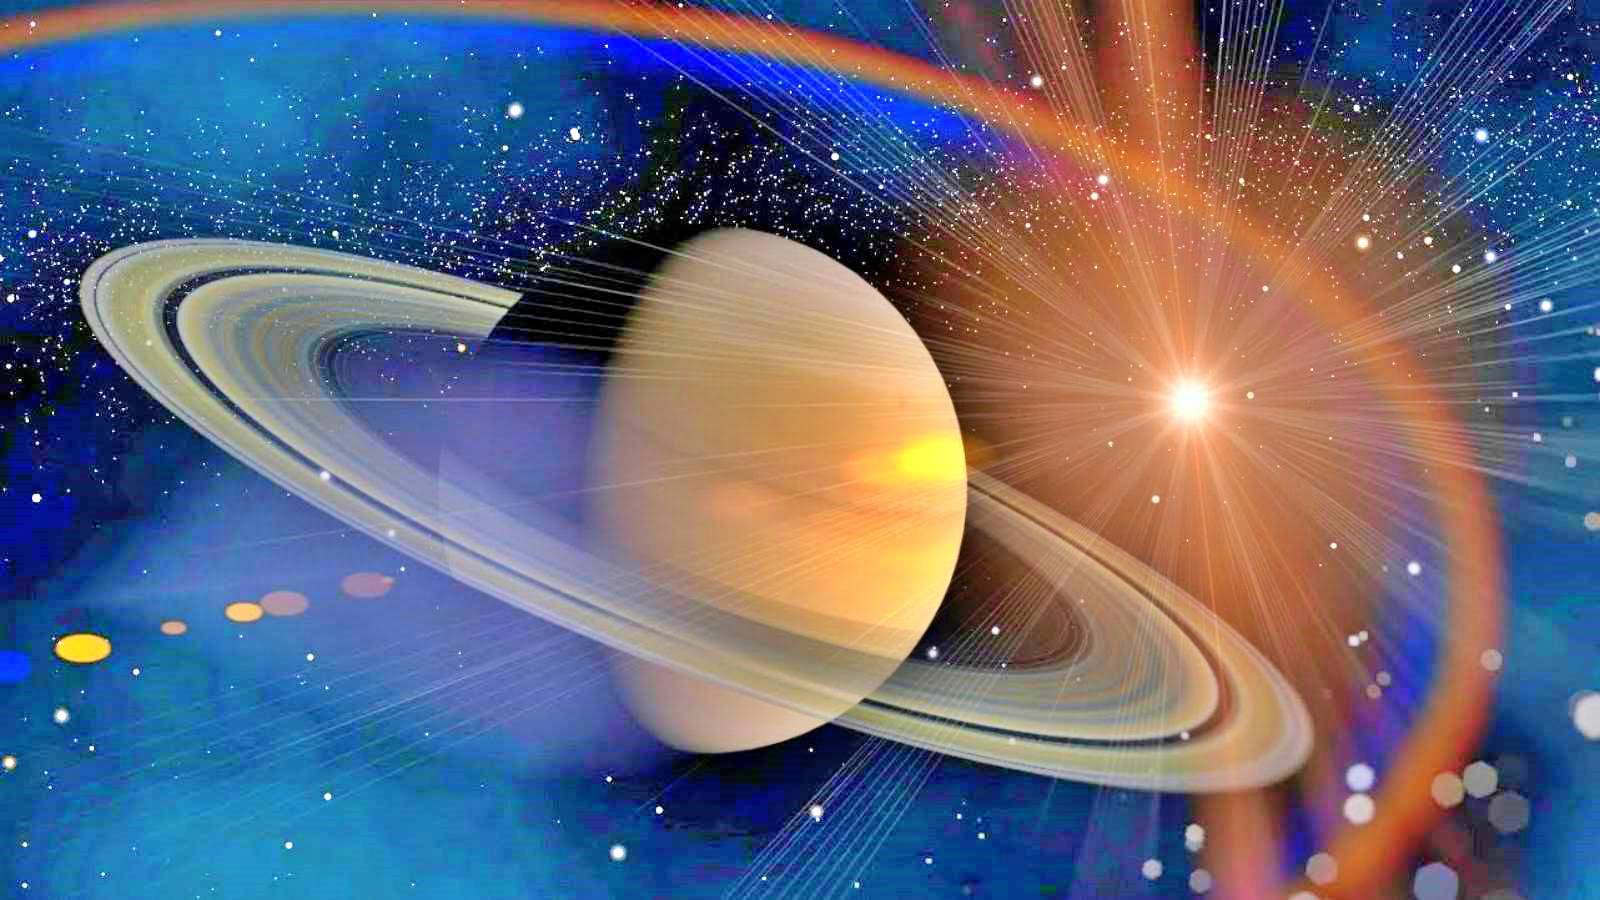 Der dunkle Planet Saturn